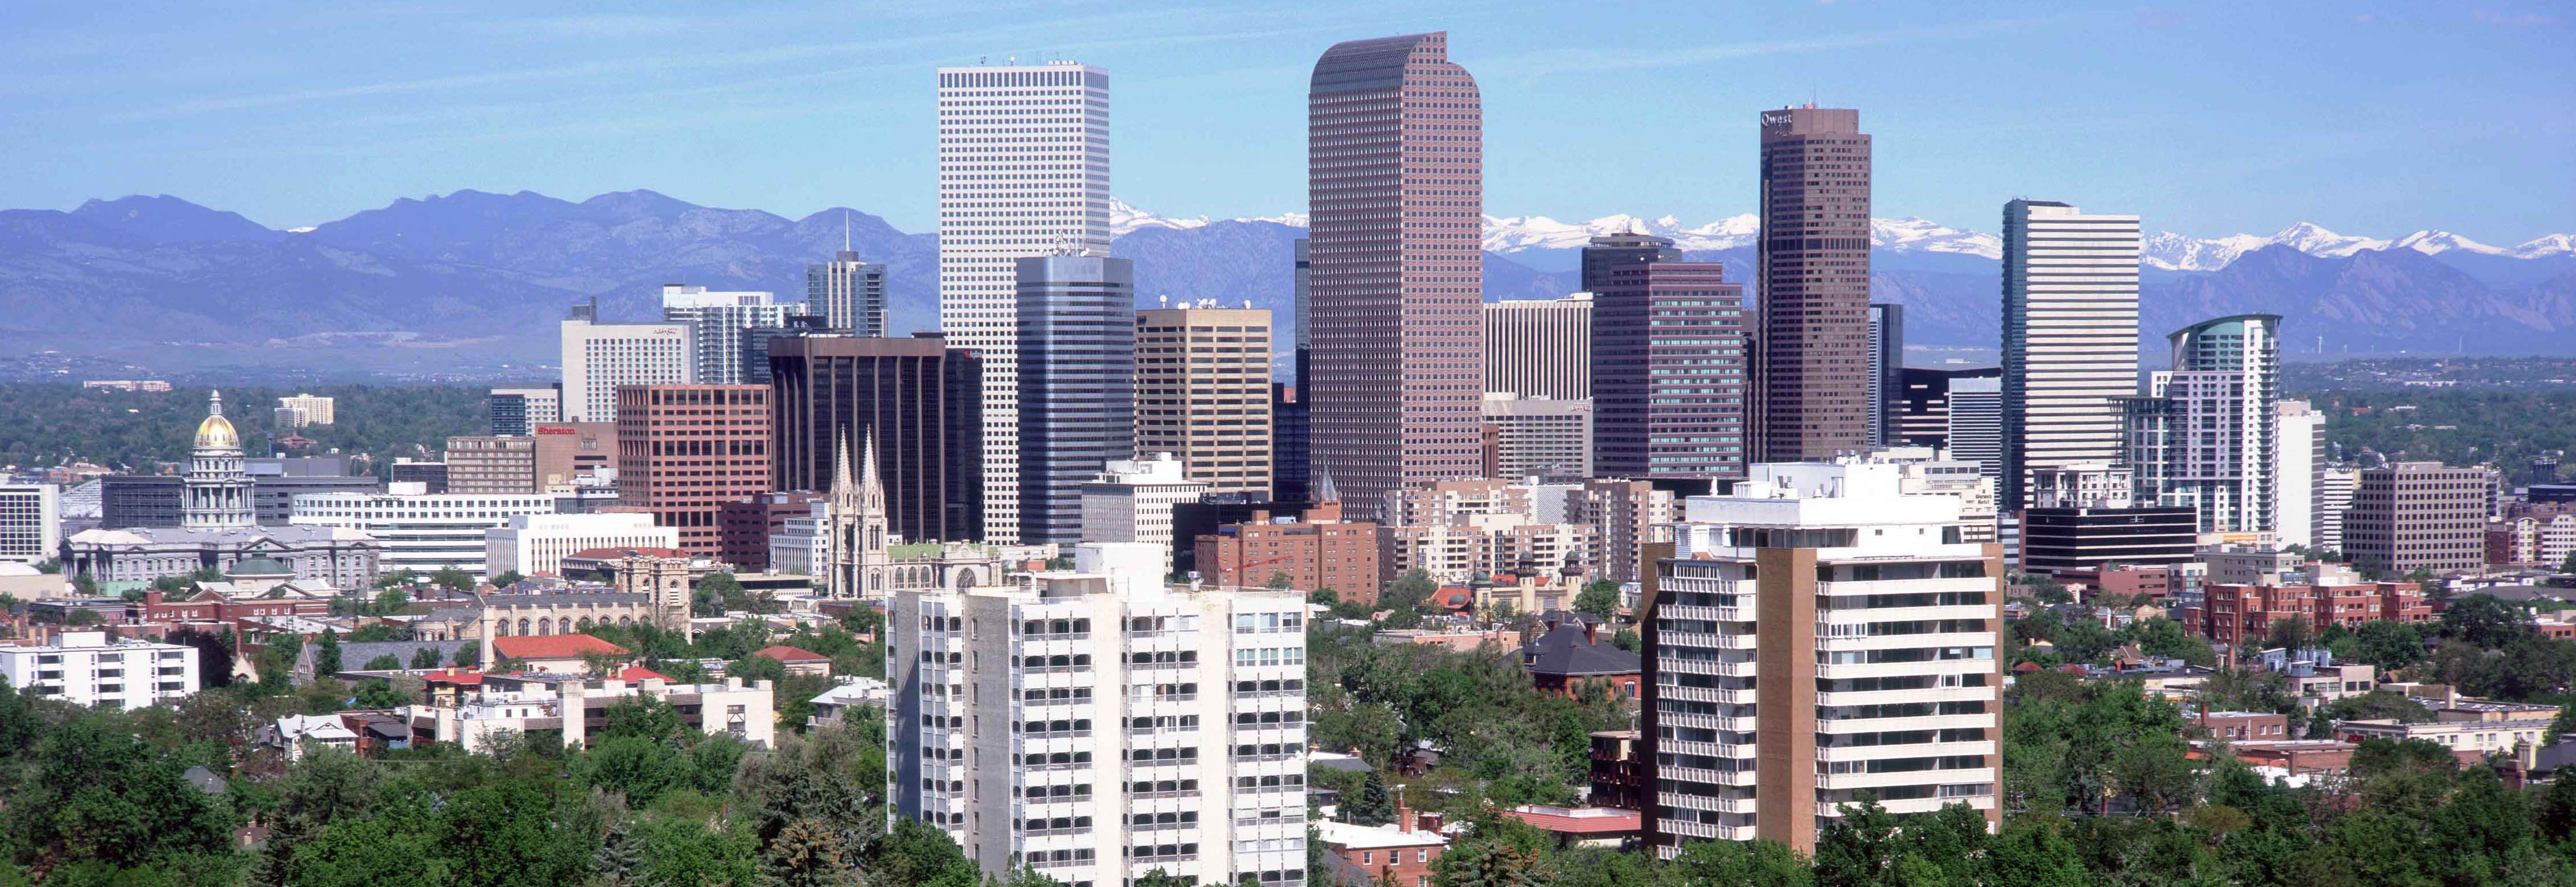 Denver's Dedicated Fund for Housing